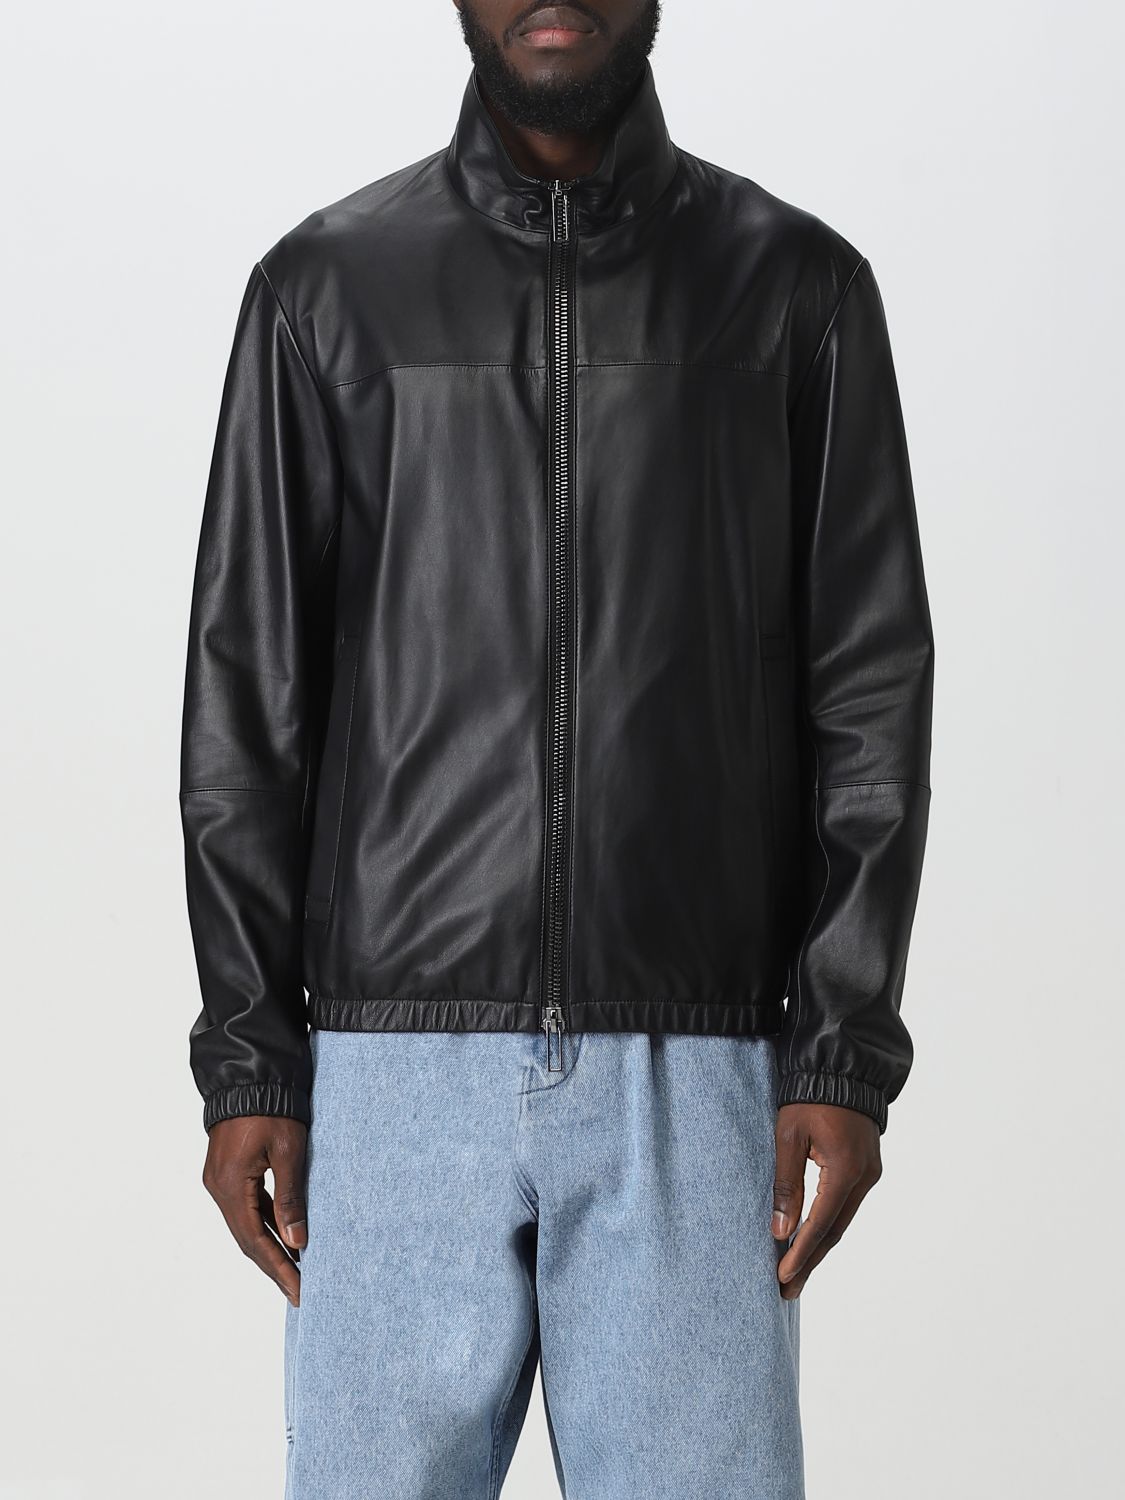 EMPORIO ARMANI: jacket for man - Black | Emporio Armani jacket 01R55P01P54  online on 